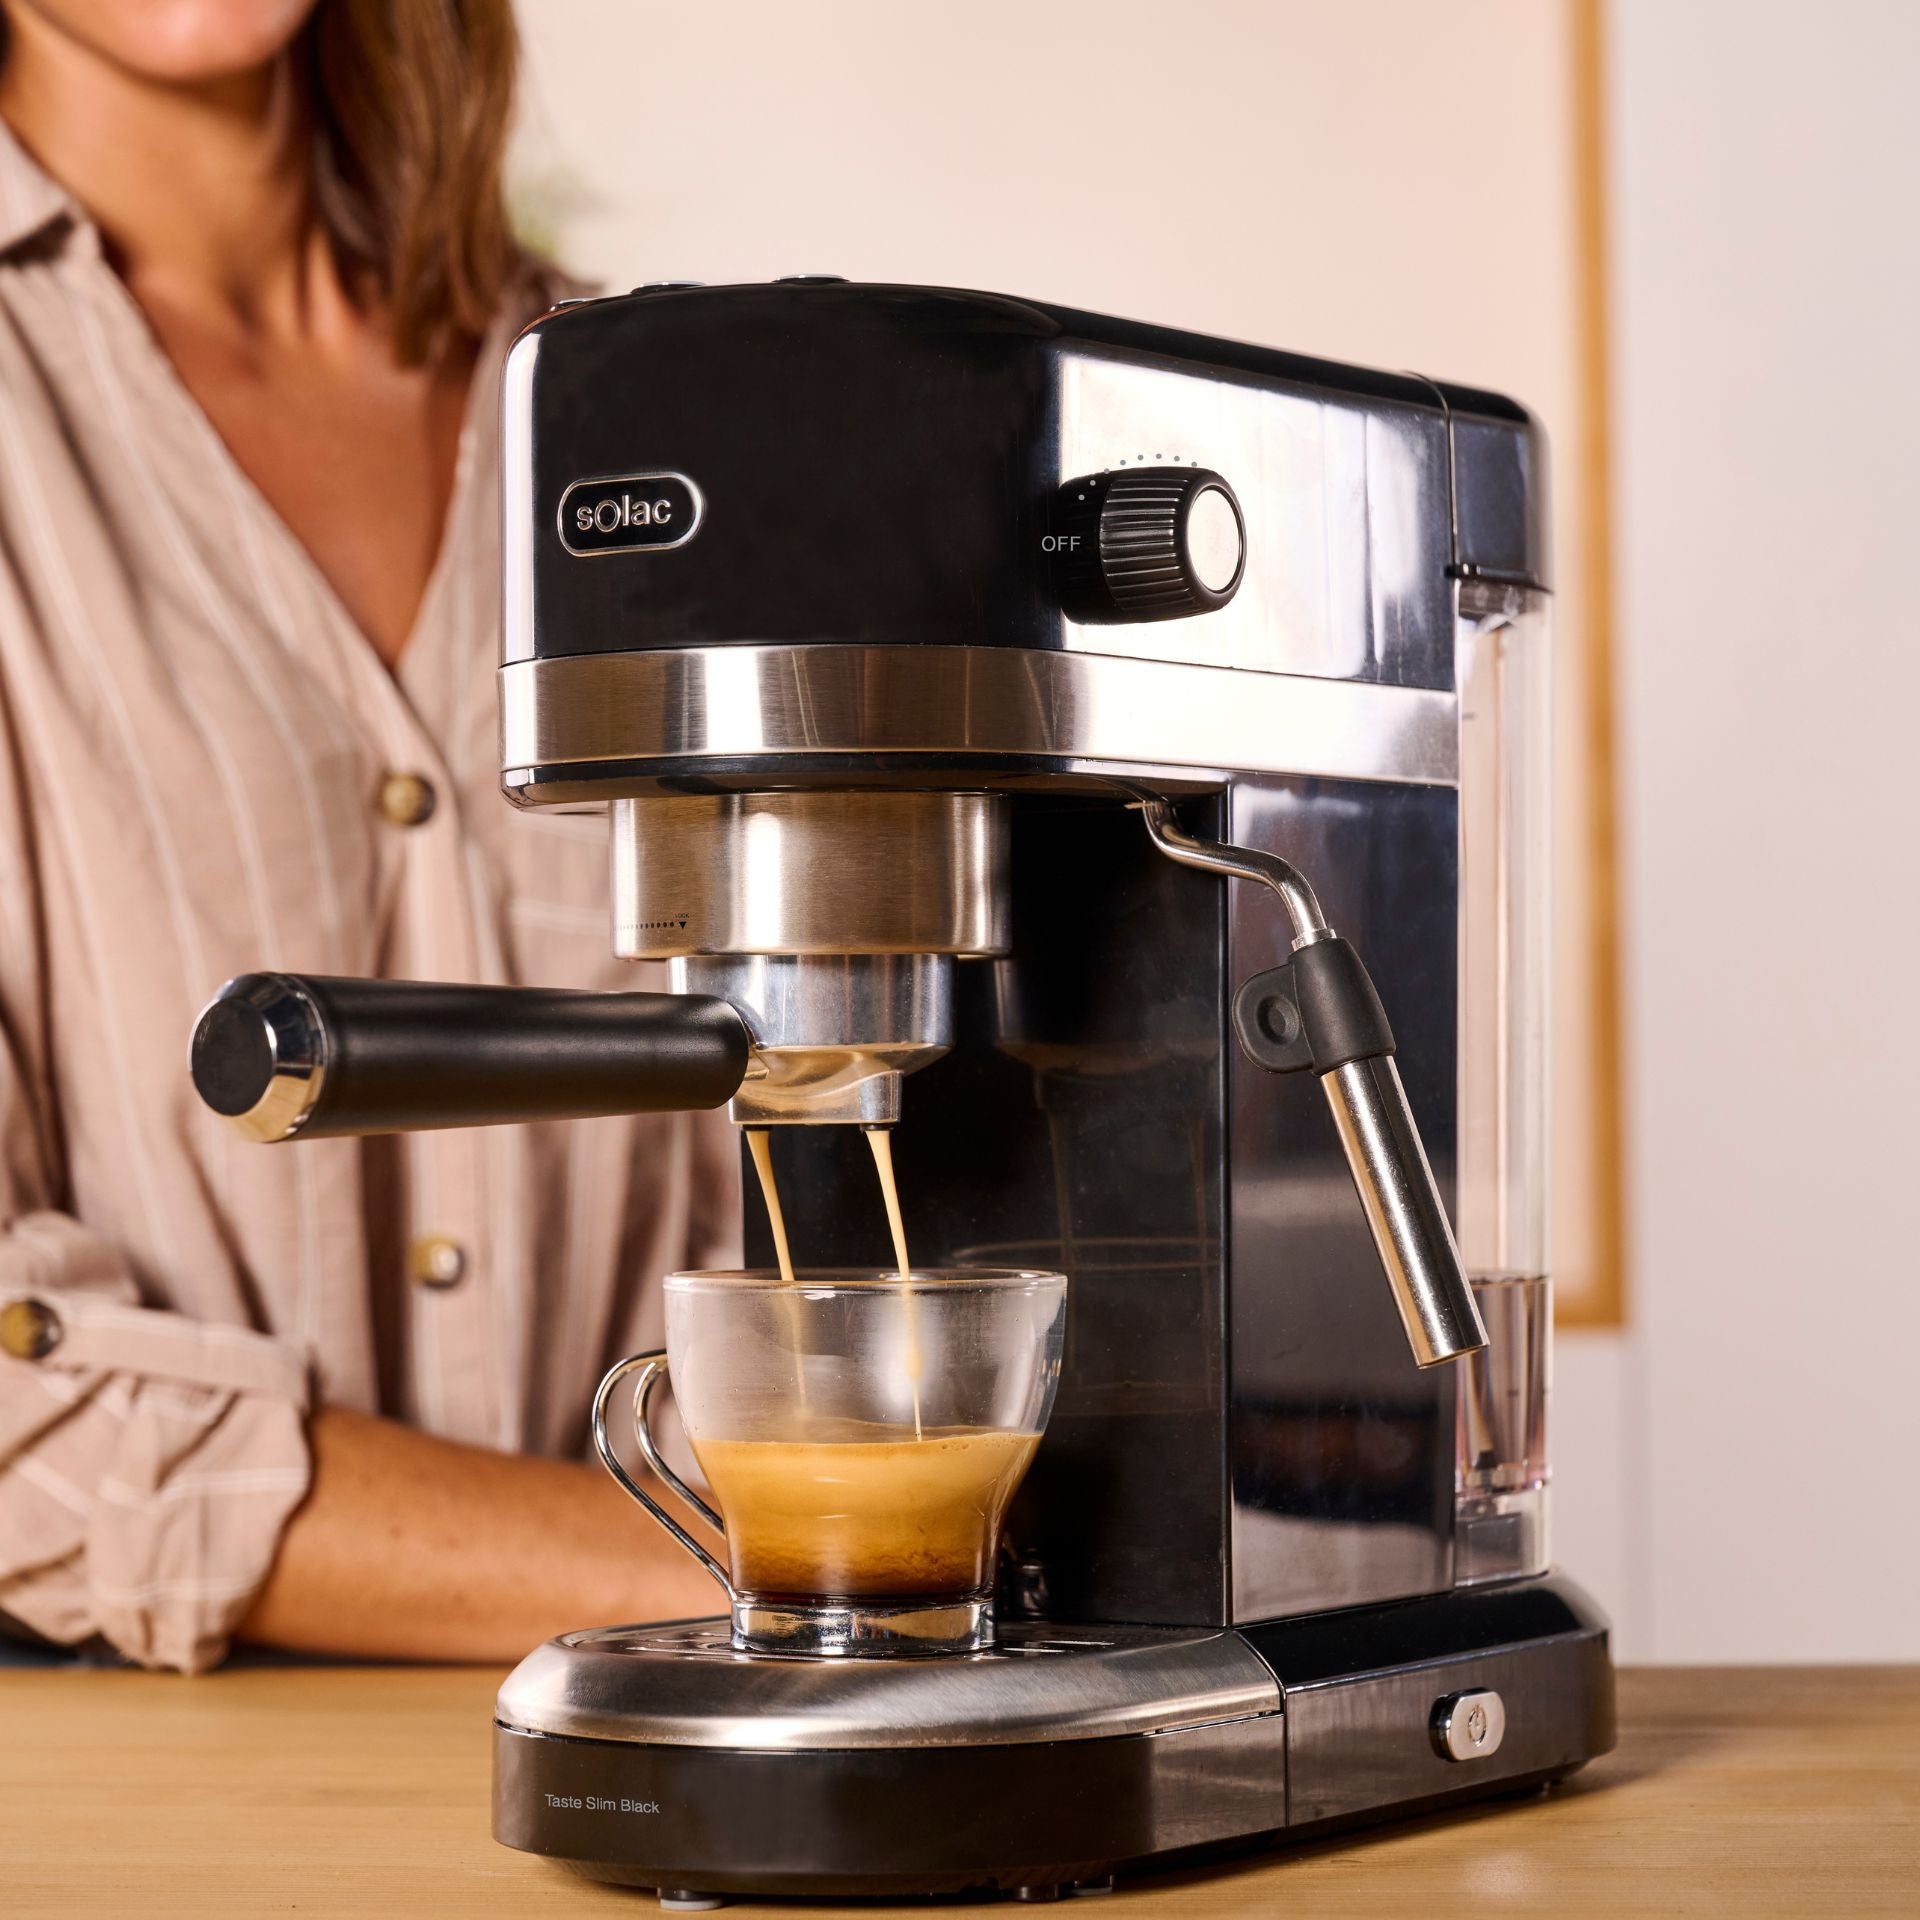 Cafetera espresso Solac Taste Slim Black CE4510, 20 bares, Apta para  monodosis, Sistema Thermoblock.